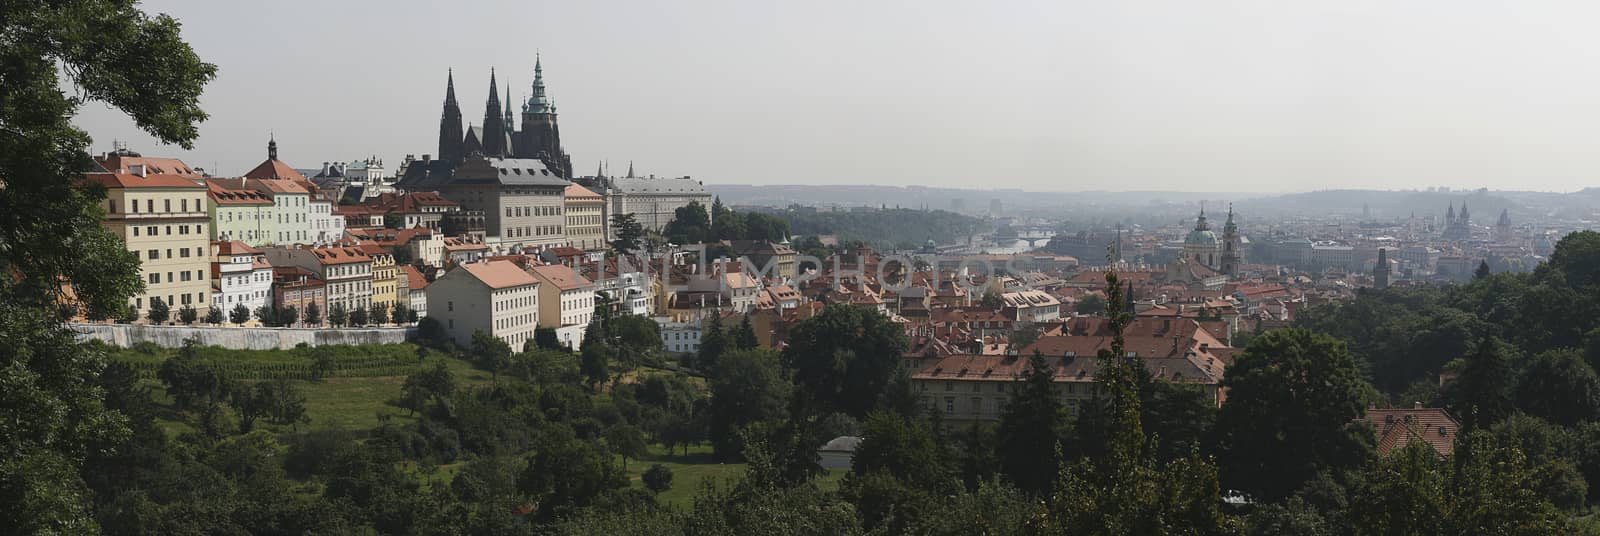 Prague panorama in summer in summer day